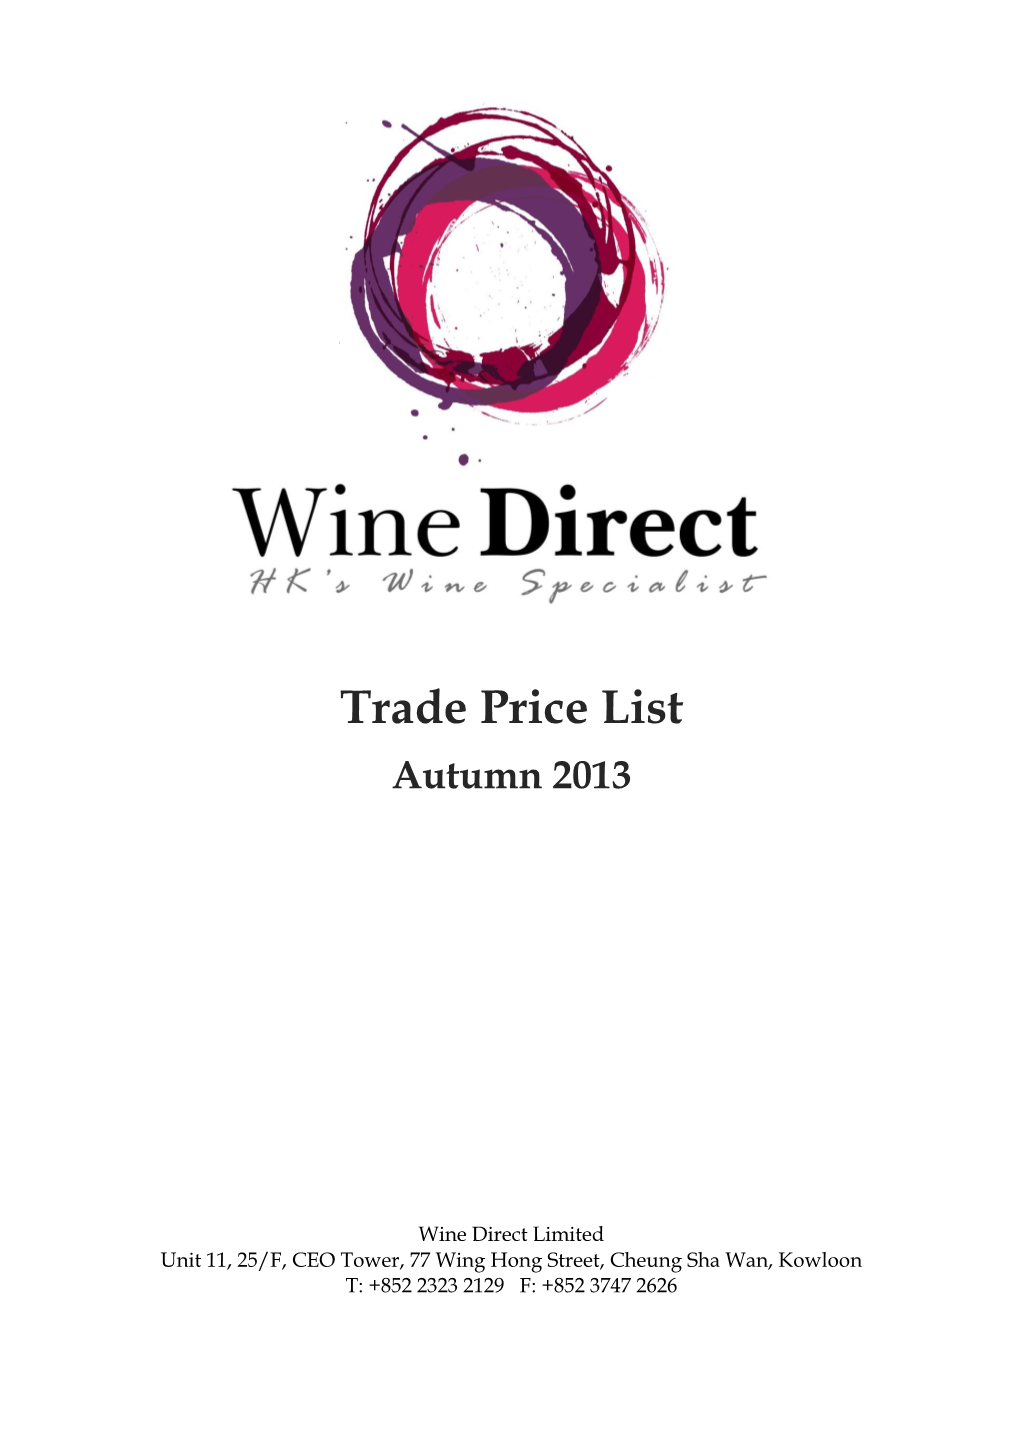 Trade Price List Autumn 2013